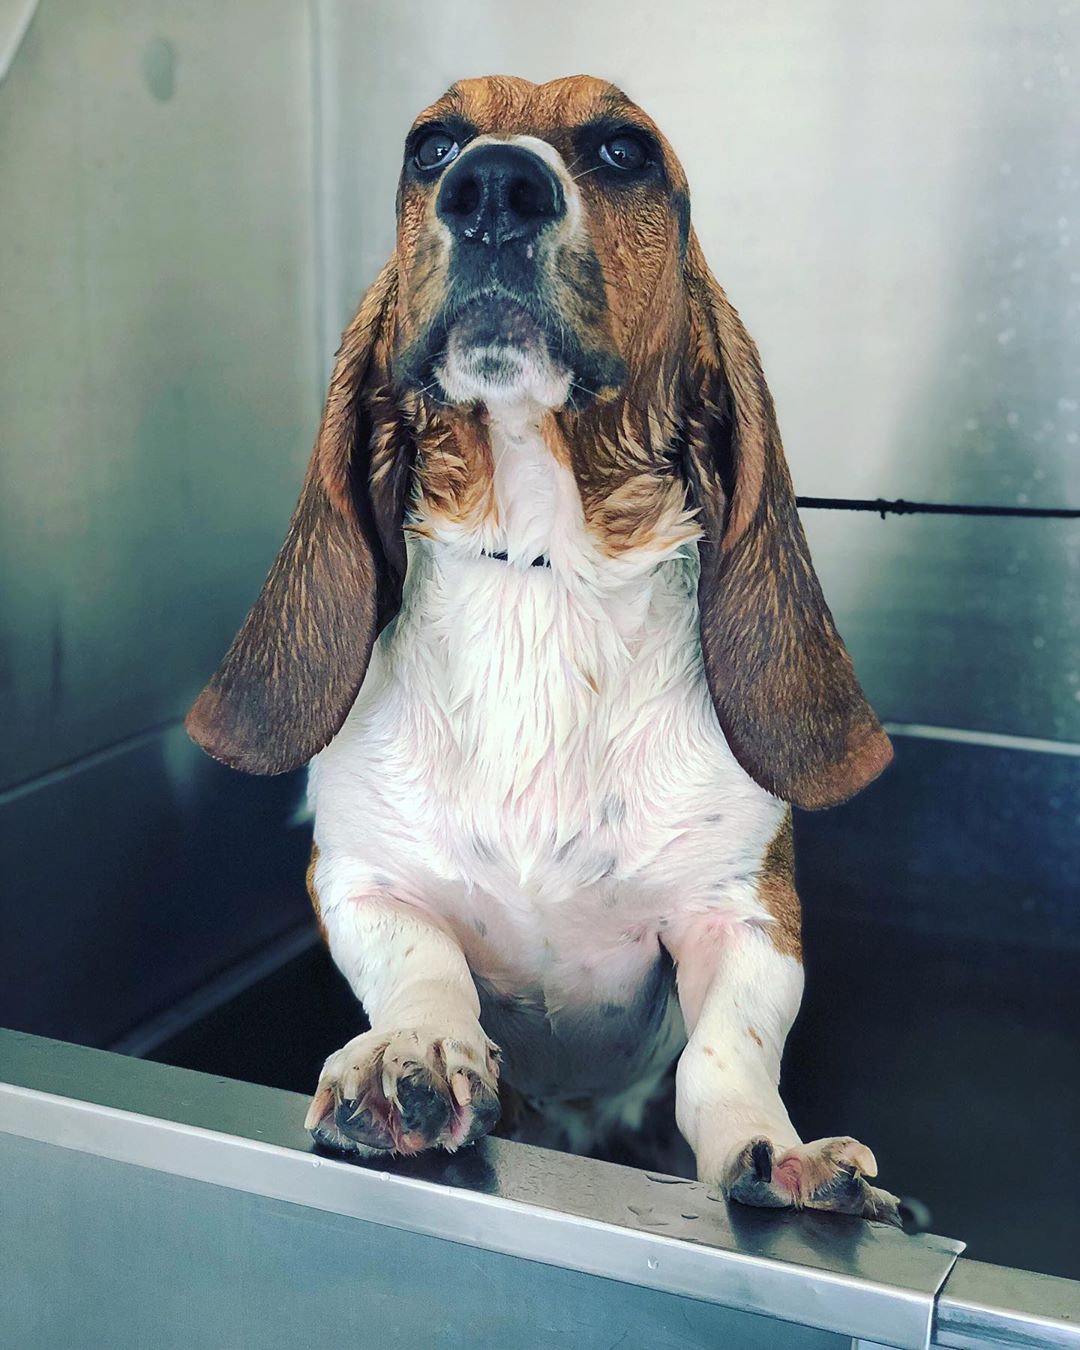 A wet Basset Hound standing inside the sink